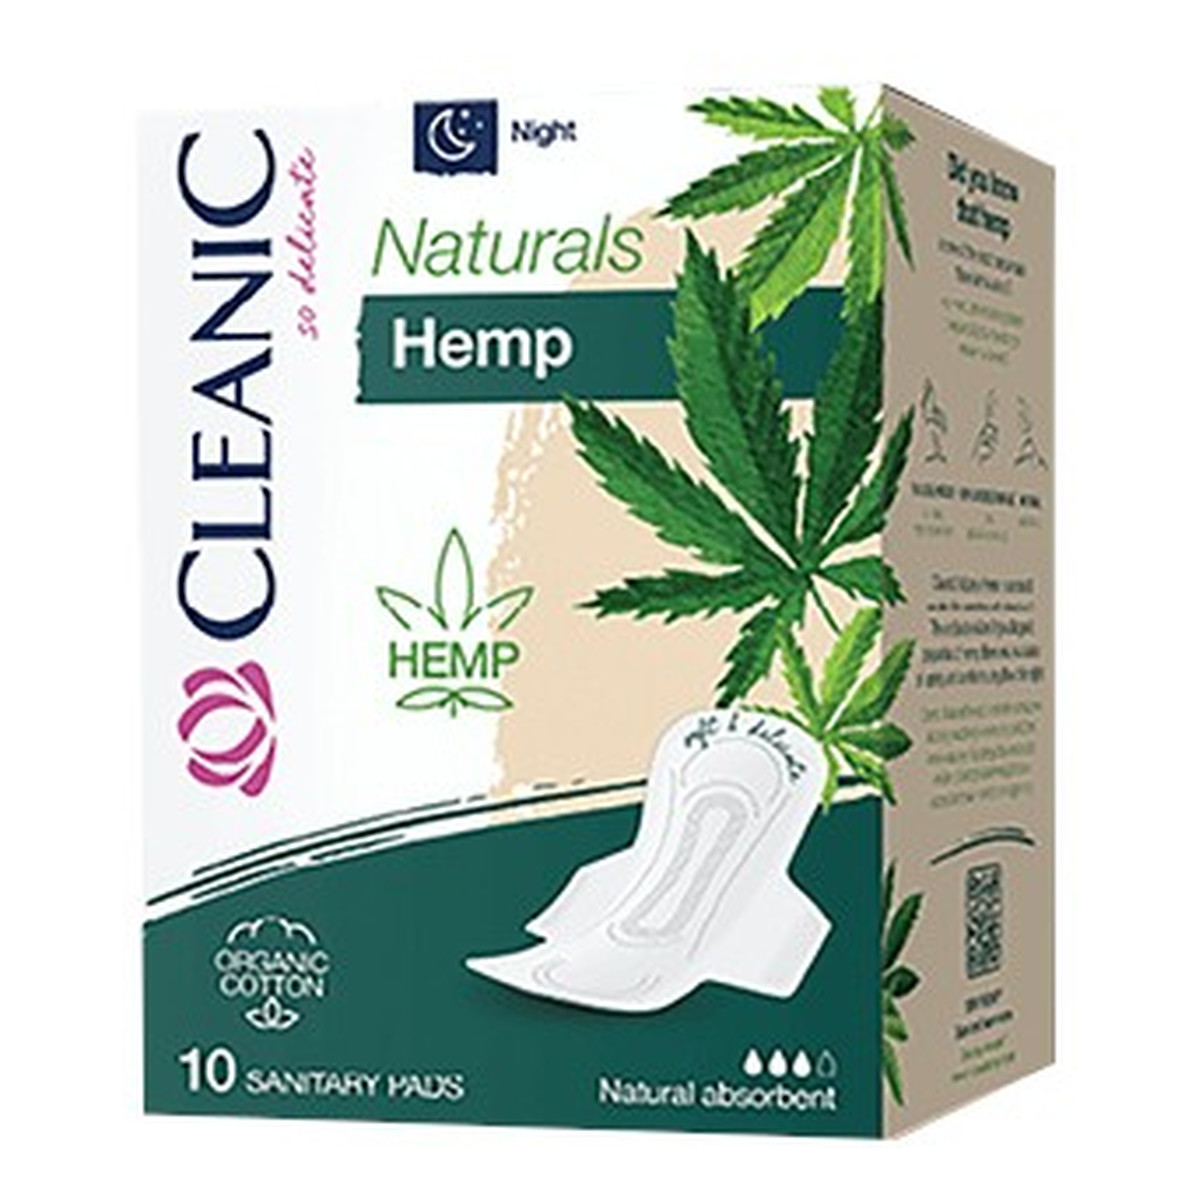 Cleanic Naturals Hemp Podpaski higieniczne Organic - na noc 10szt